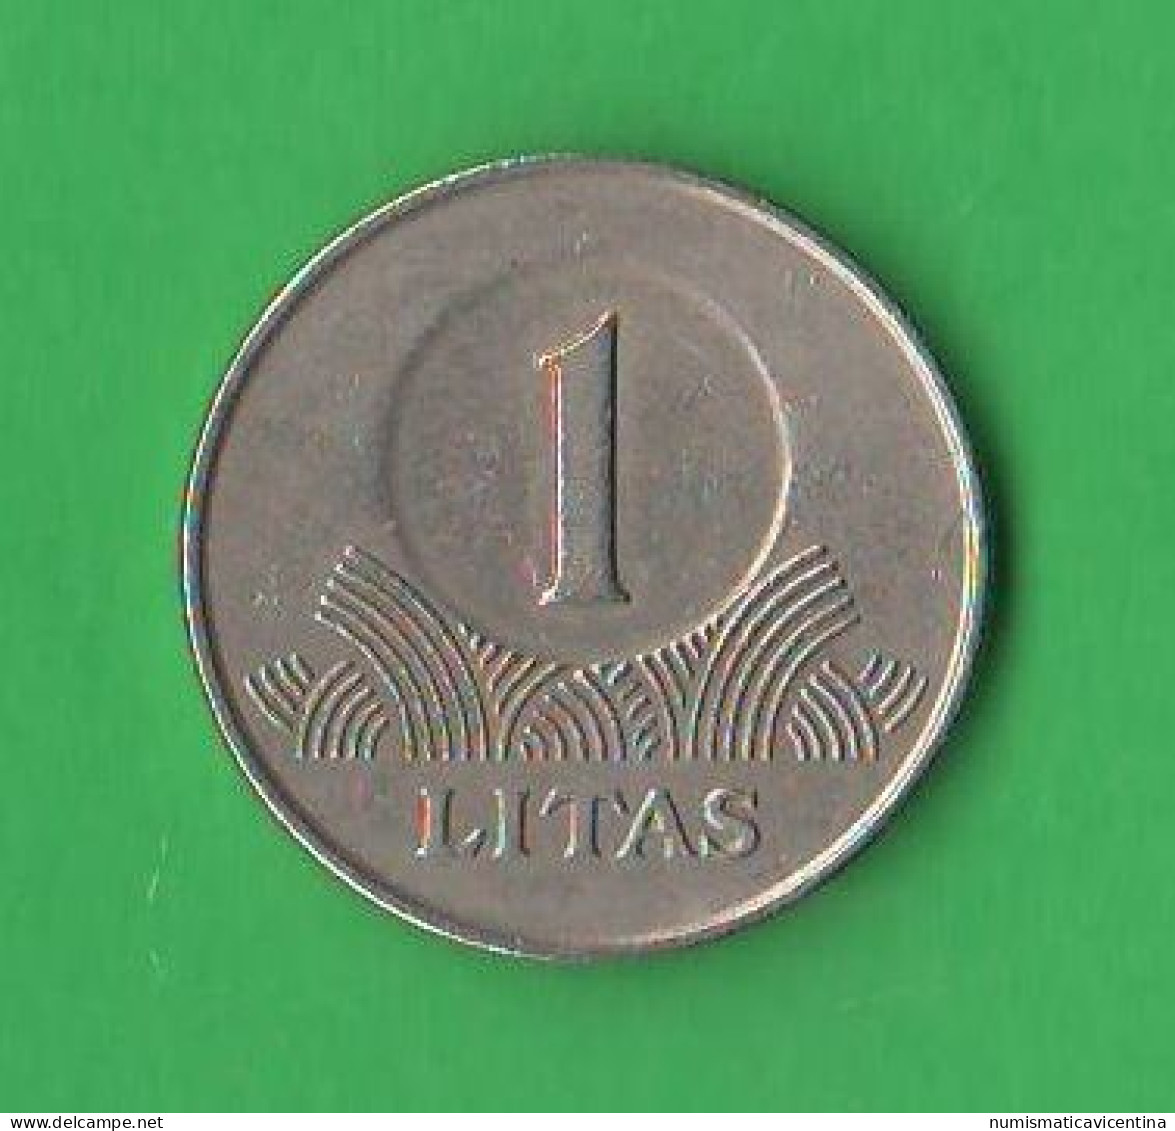 Lituania 1 Litas 1999 Lietuva Nickel Coin - Lithuania